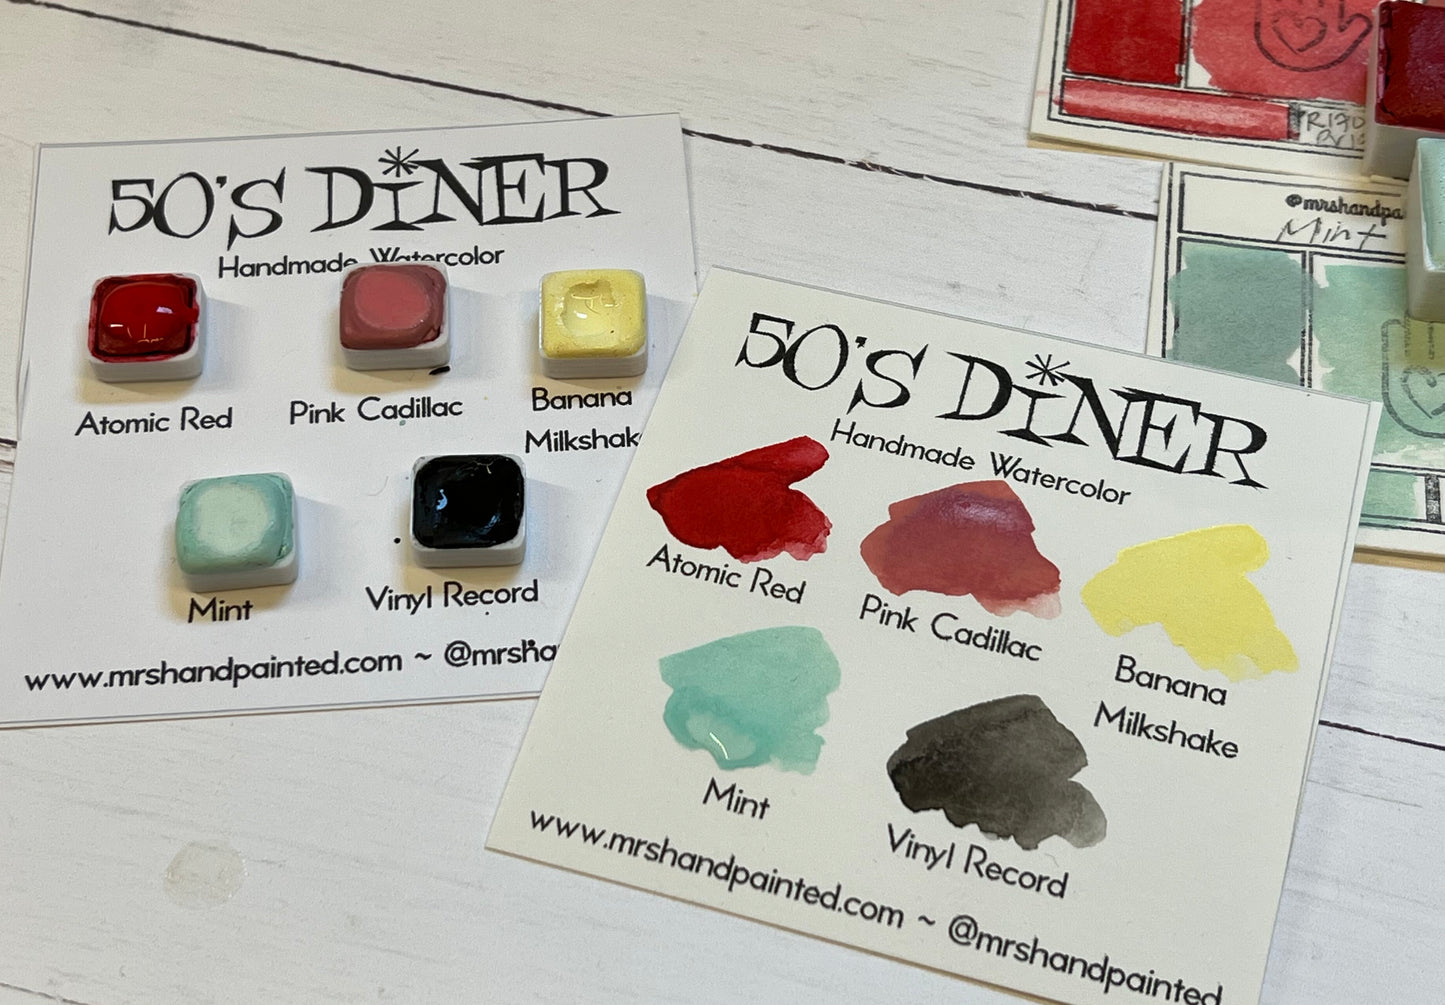 Handmade Watercolor Paints Set - 50's DINER